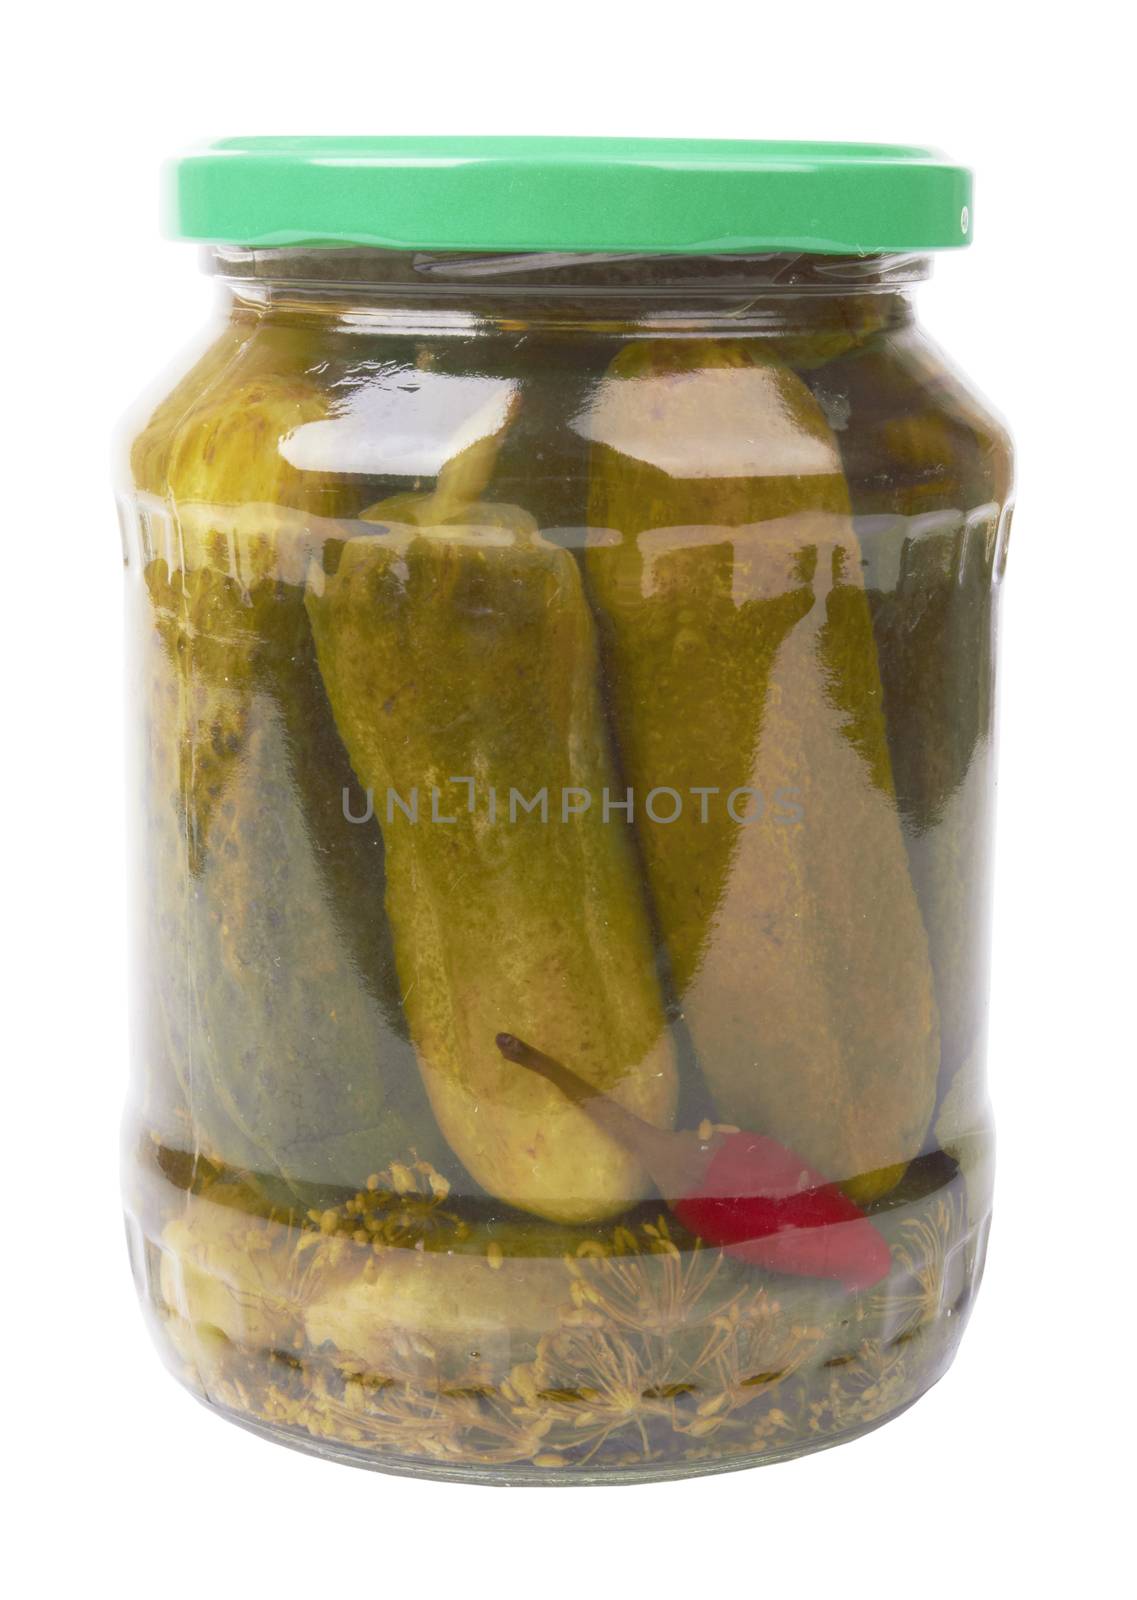 pickles in a glass jar by pioneer111